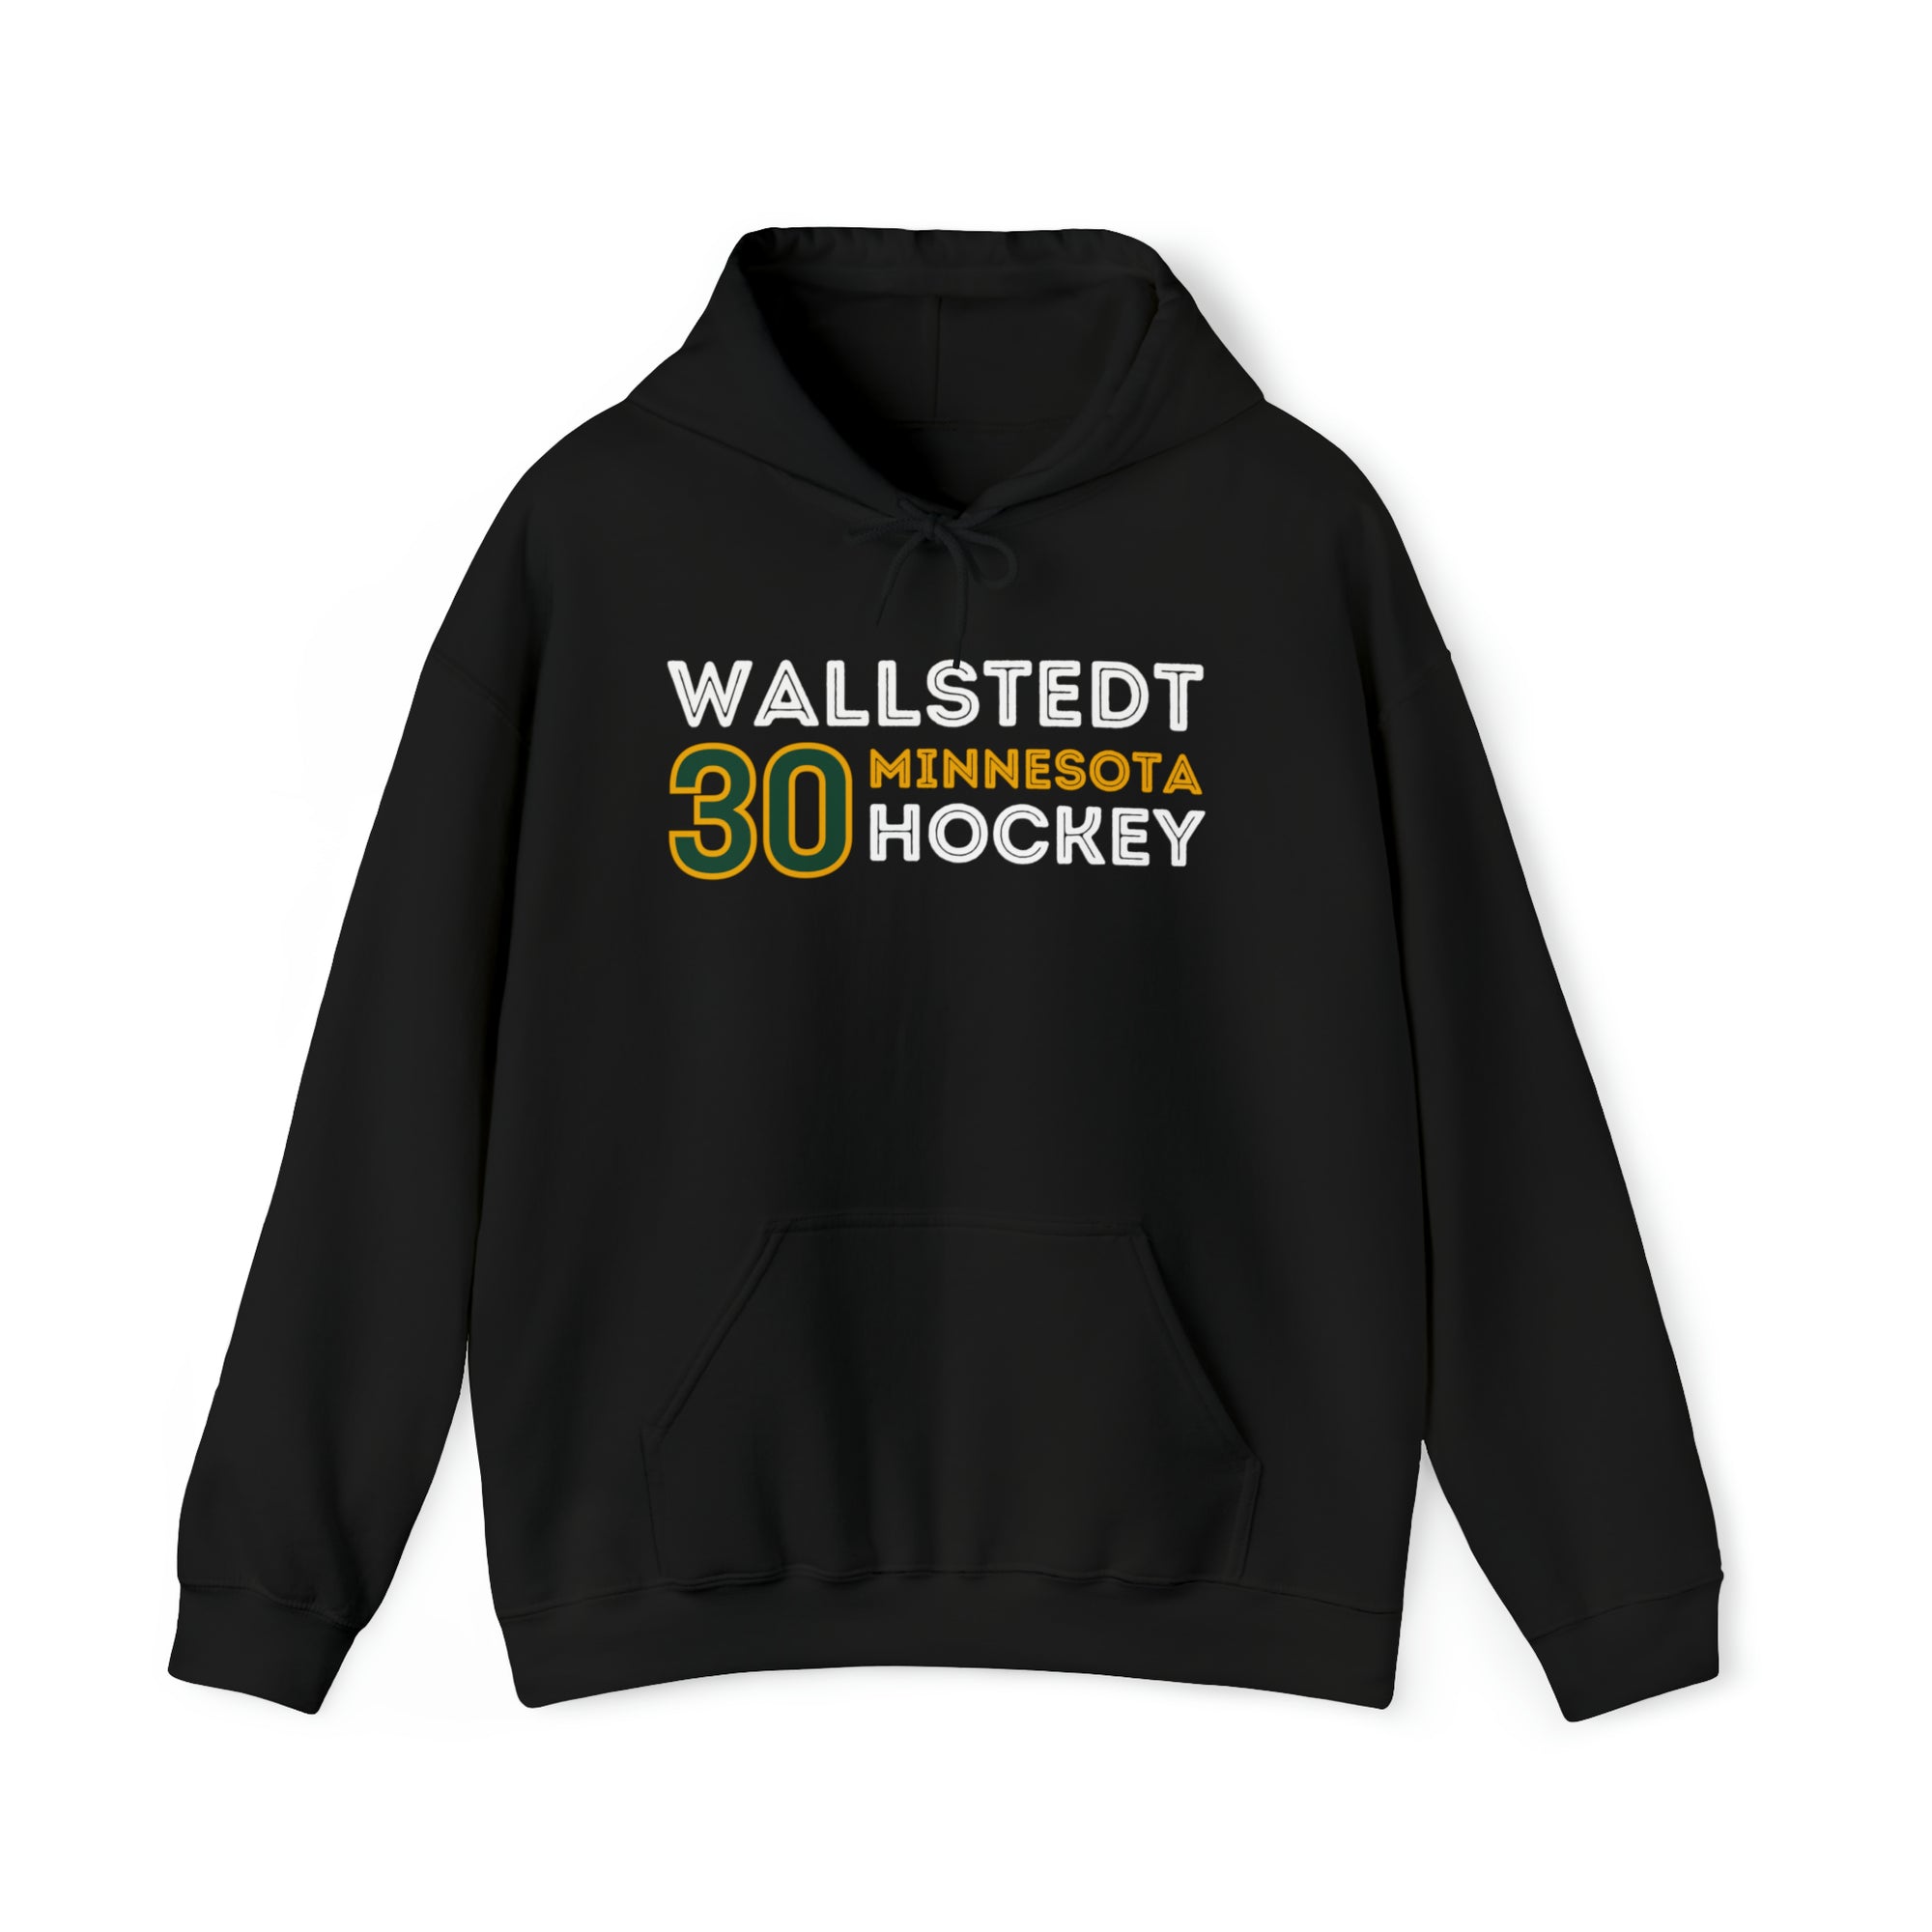 Wallstedt 30 Minnesota Hockey Grafitti Wall Design Unisex Hooded Sweatshirt